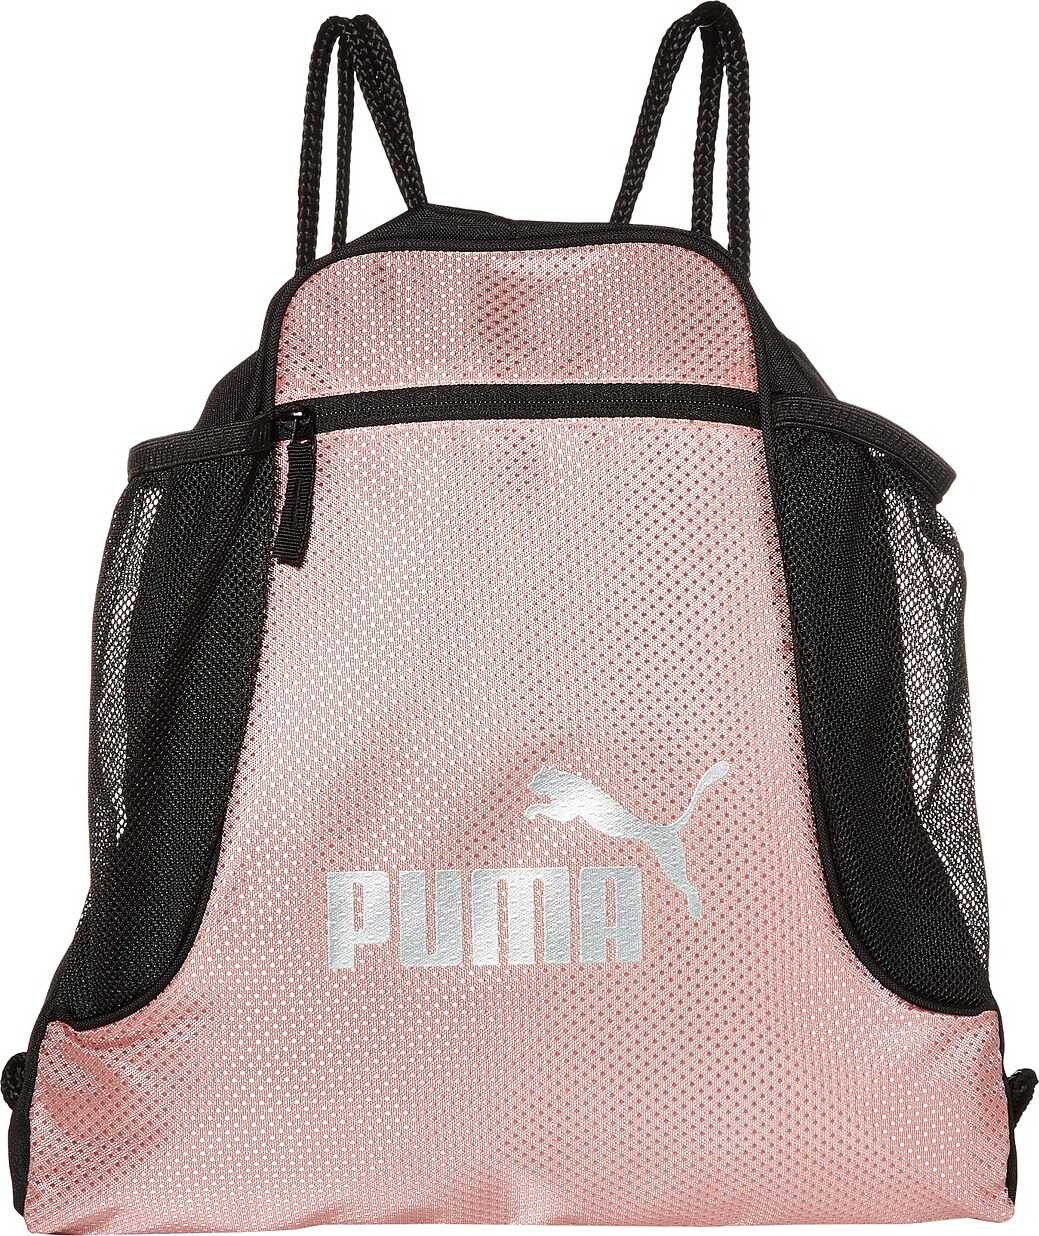 PUMA Evercat Equinox Carrysack Medium Pink